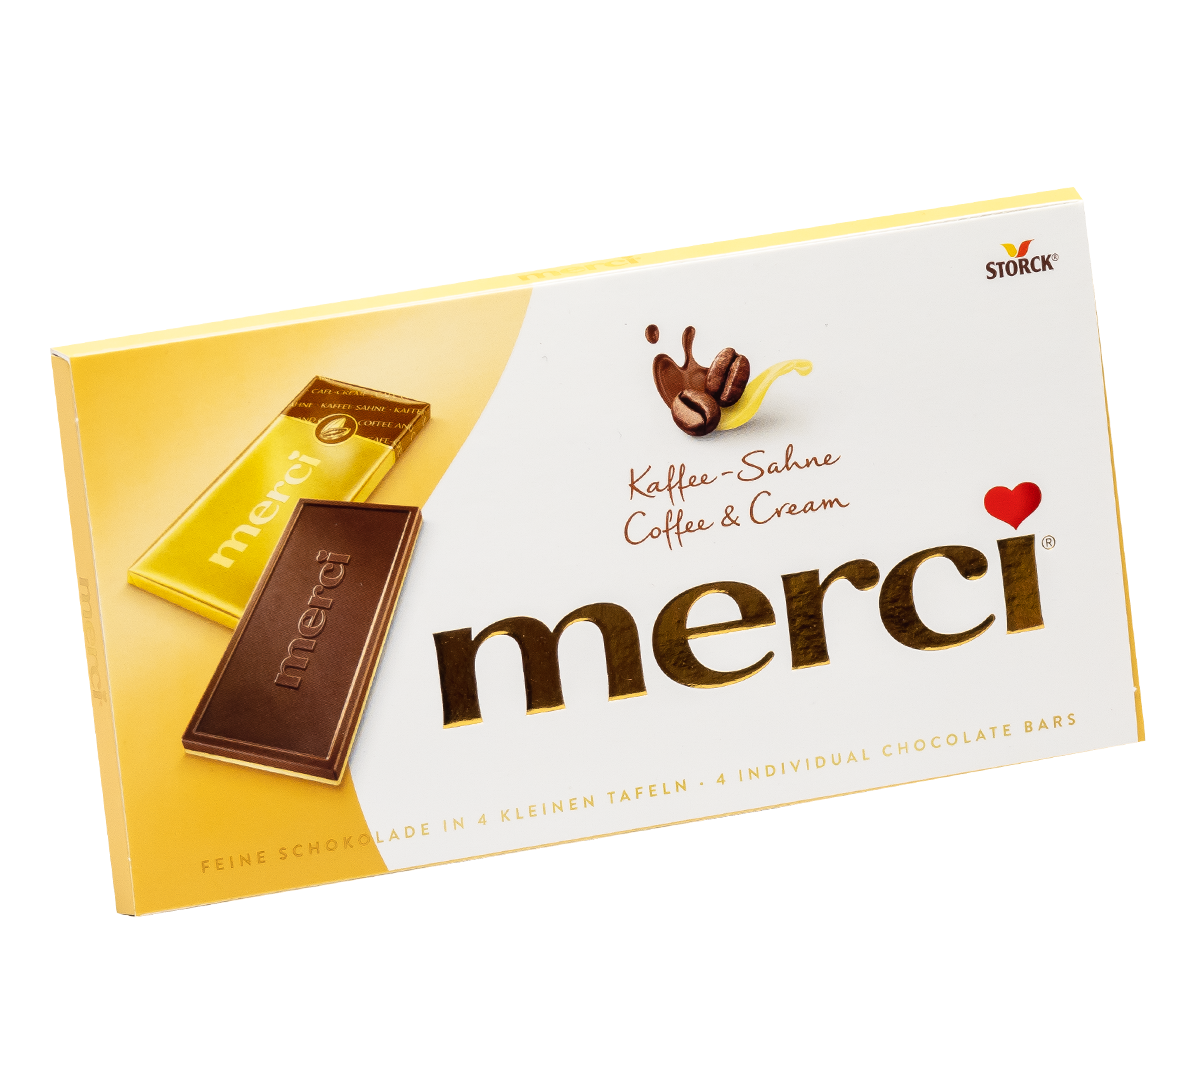 Storck merci chocolate bar coffee cream (Kaffee-Sahne)100g